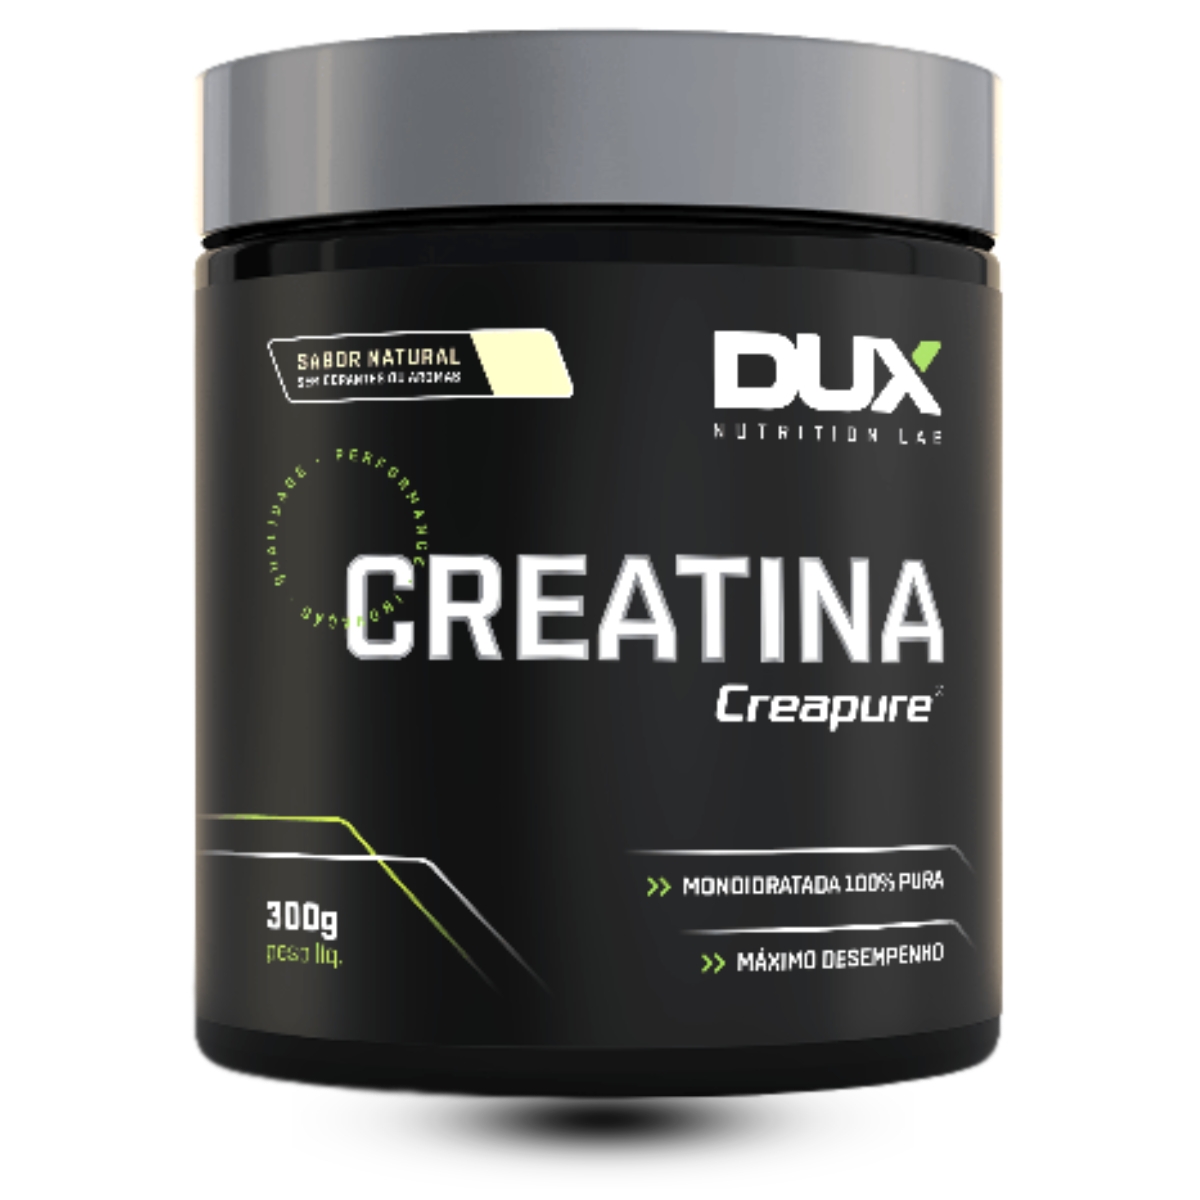 Creatina Creapure 300g Dux Dux Nutrition Lab 7378